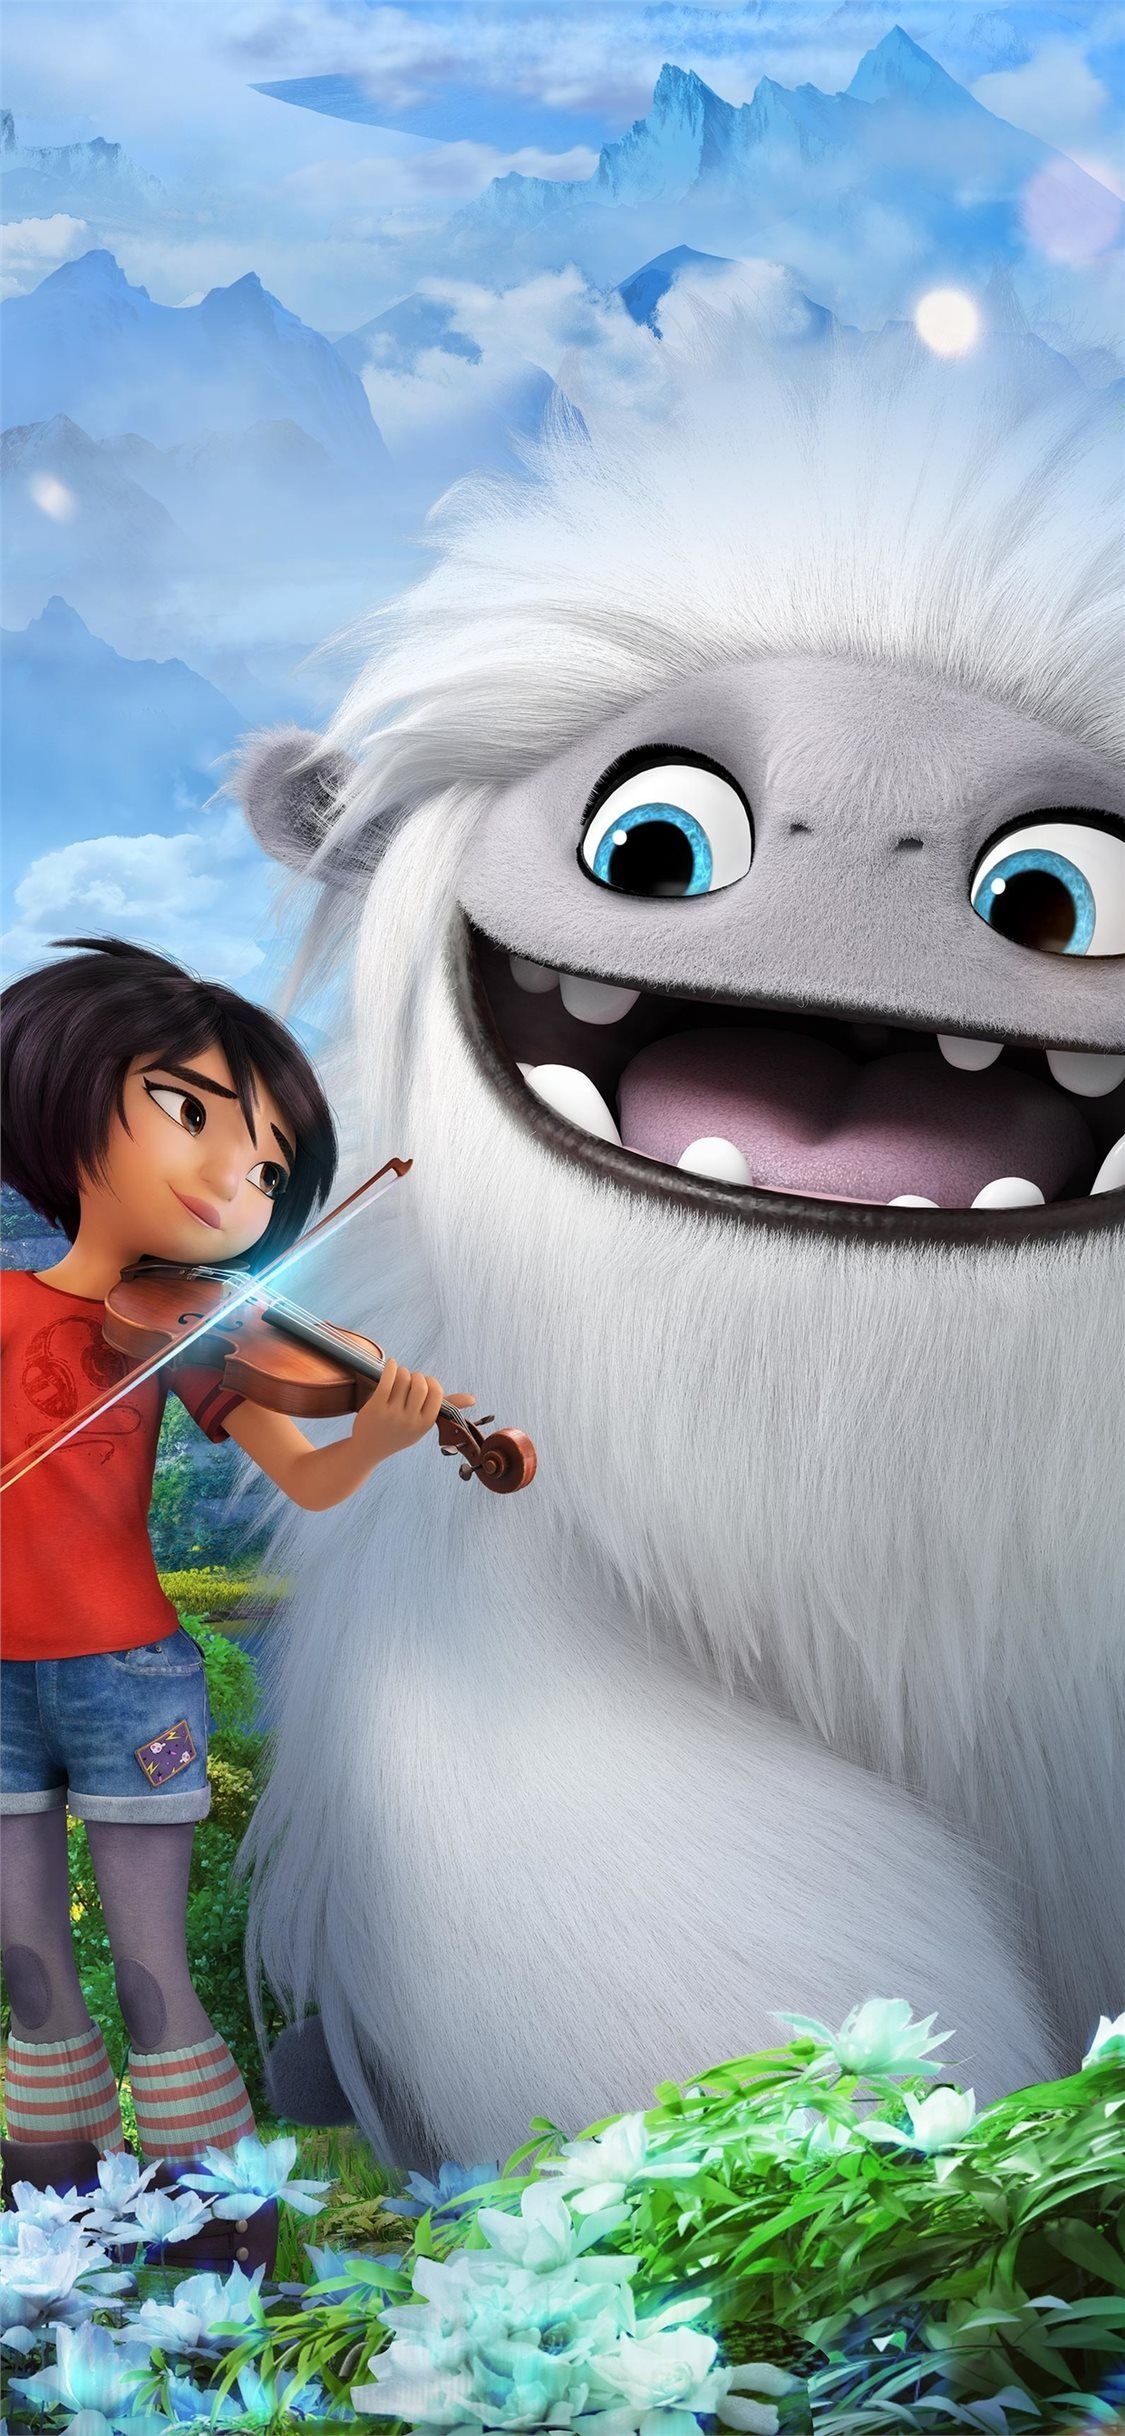 DreamWorks: Abominable, Animation, Movie, Yeti. 1130x2440 HD Wallpaper.